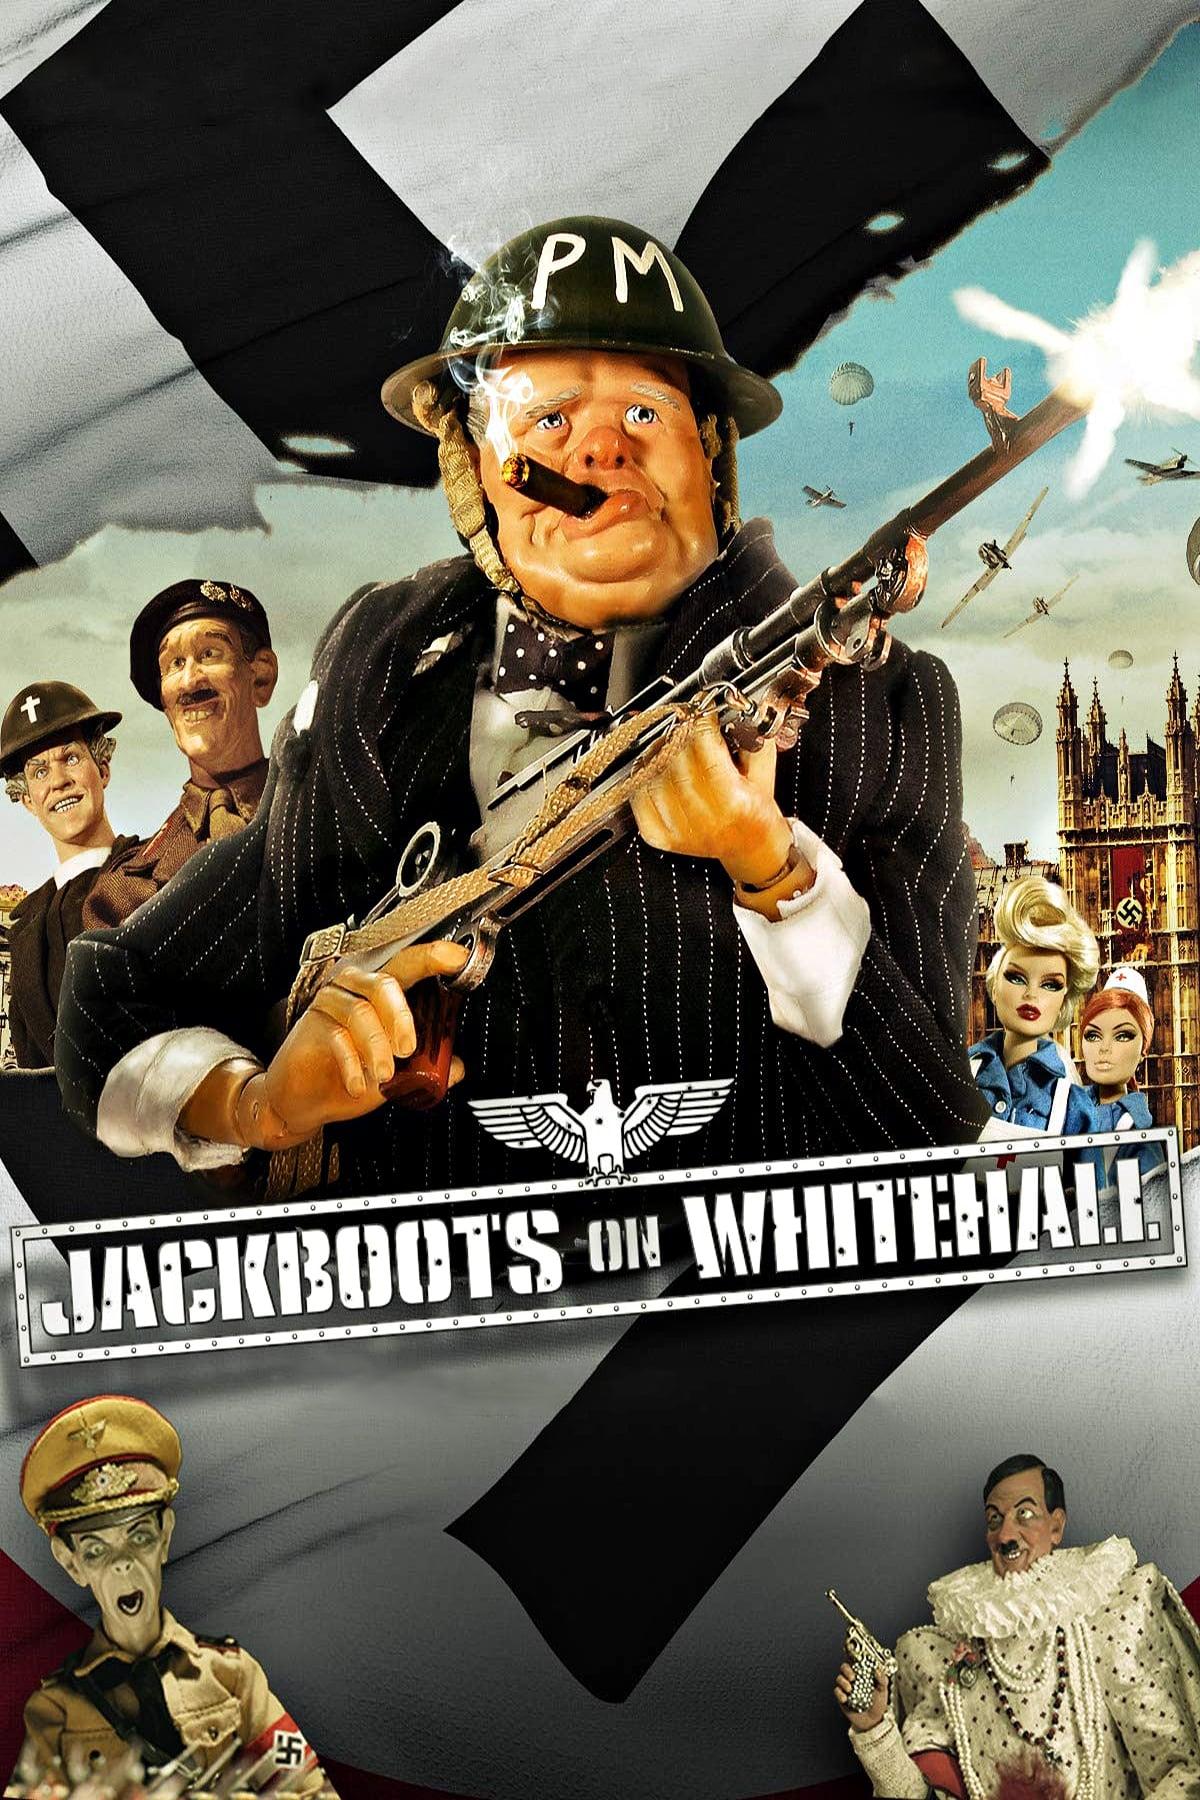 Jackboots on Whitehall poster